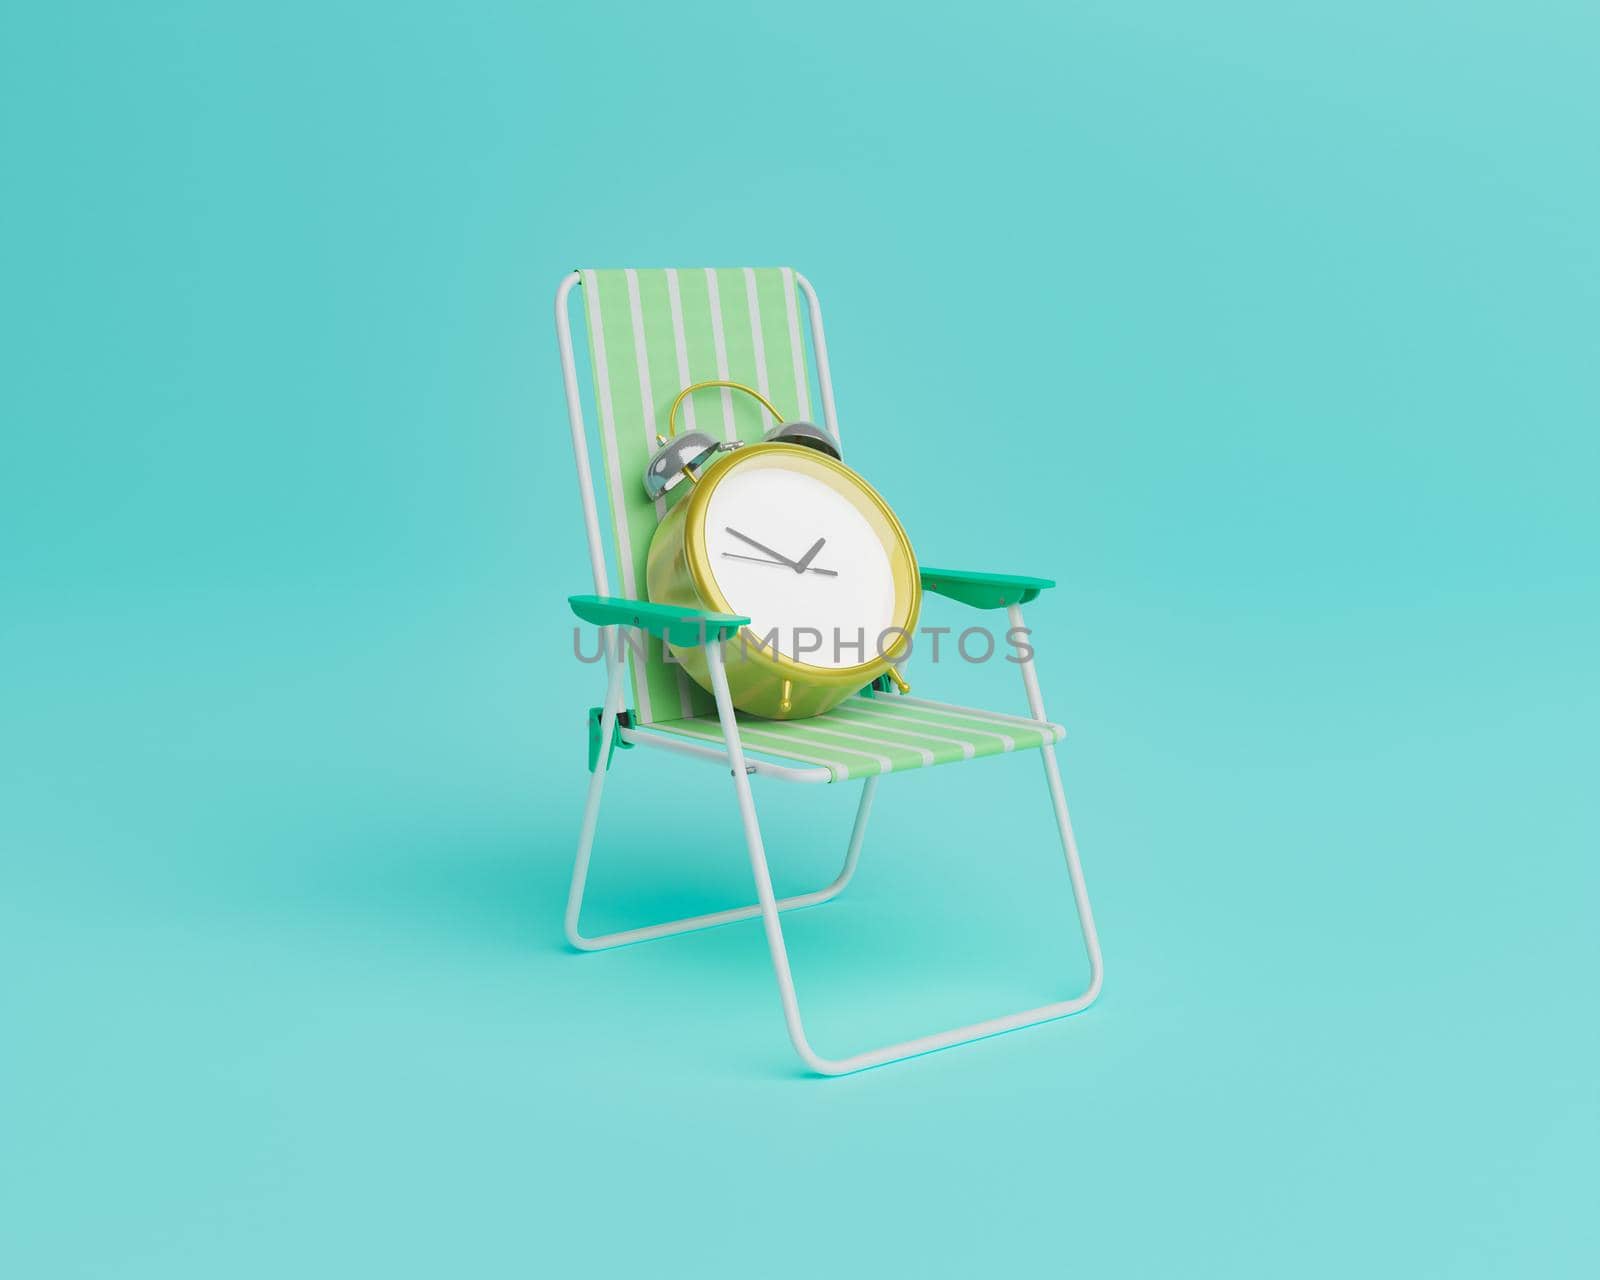 clock on a beach chair by asolano